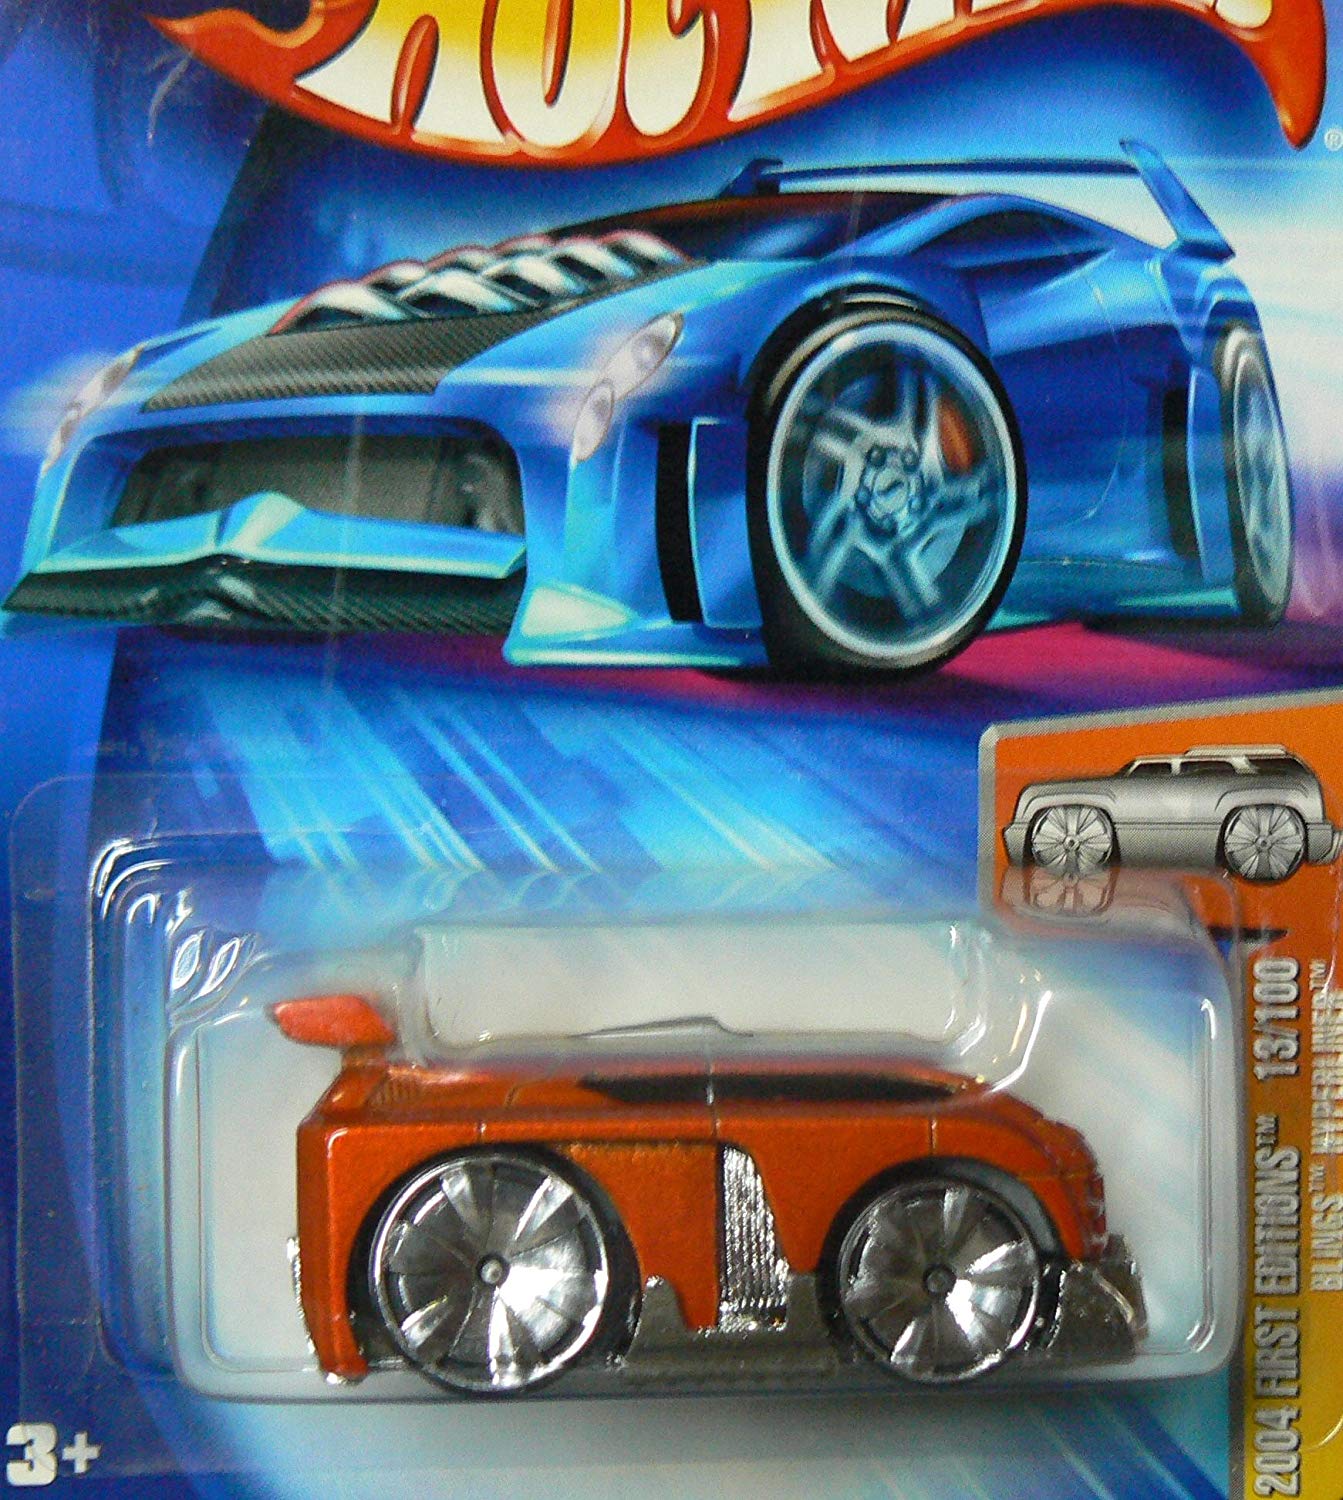 Mattel Hot Wheels 2004 Rhinestones Orange Hyperliner 1: 64 Scale Die Cast Car # 01